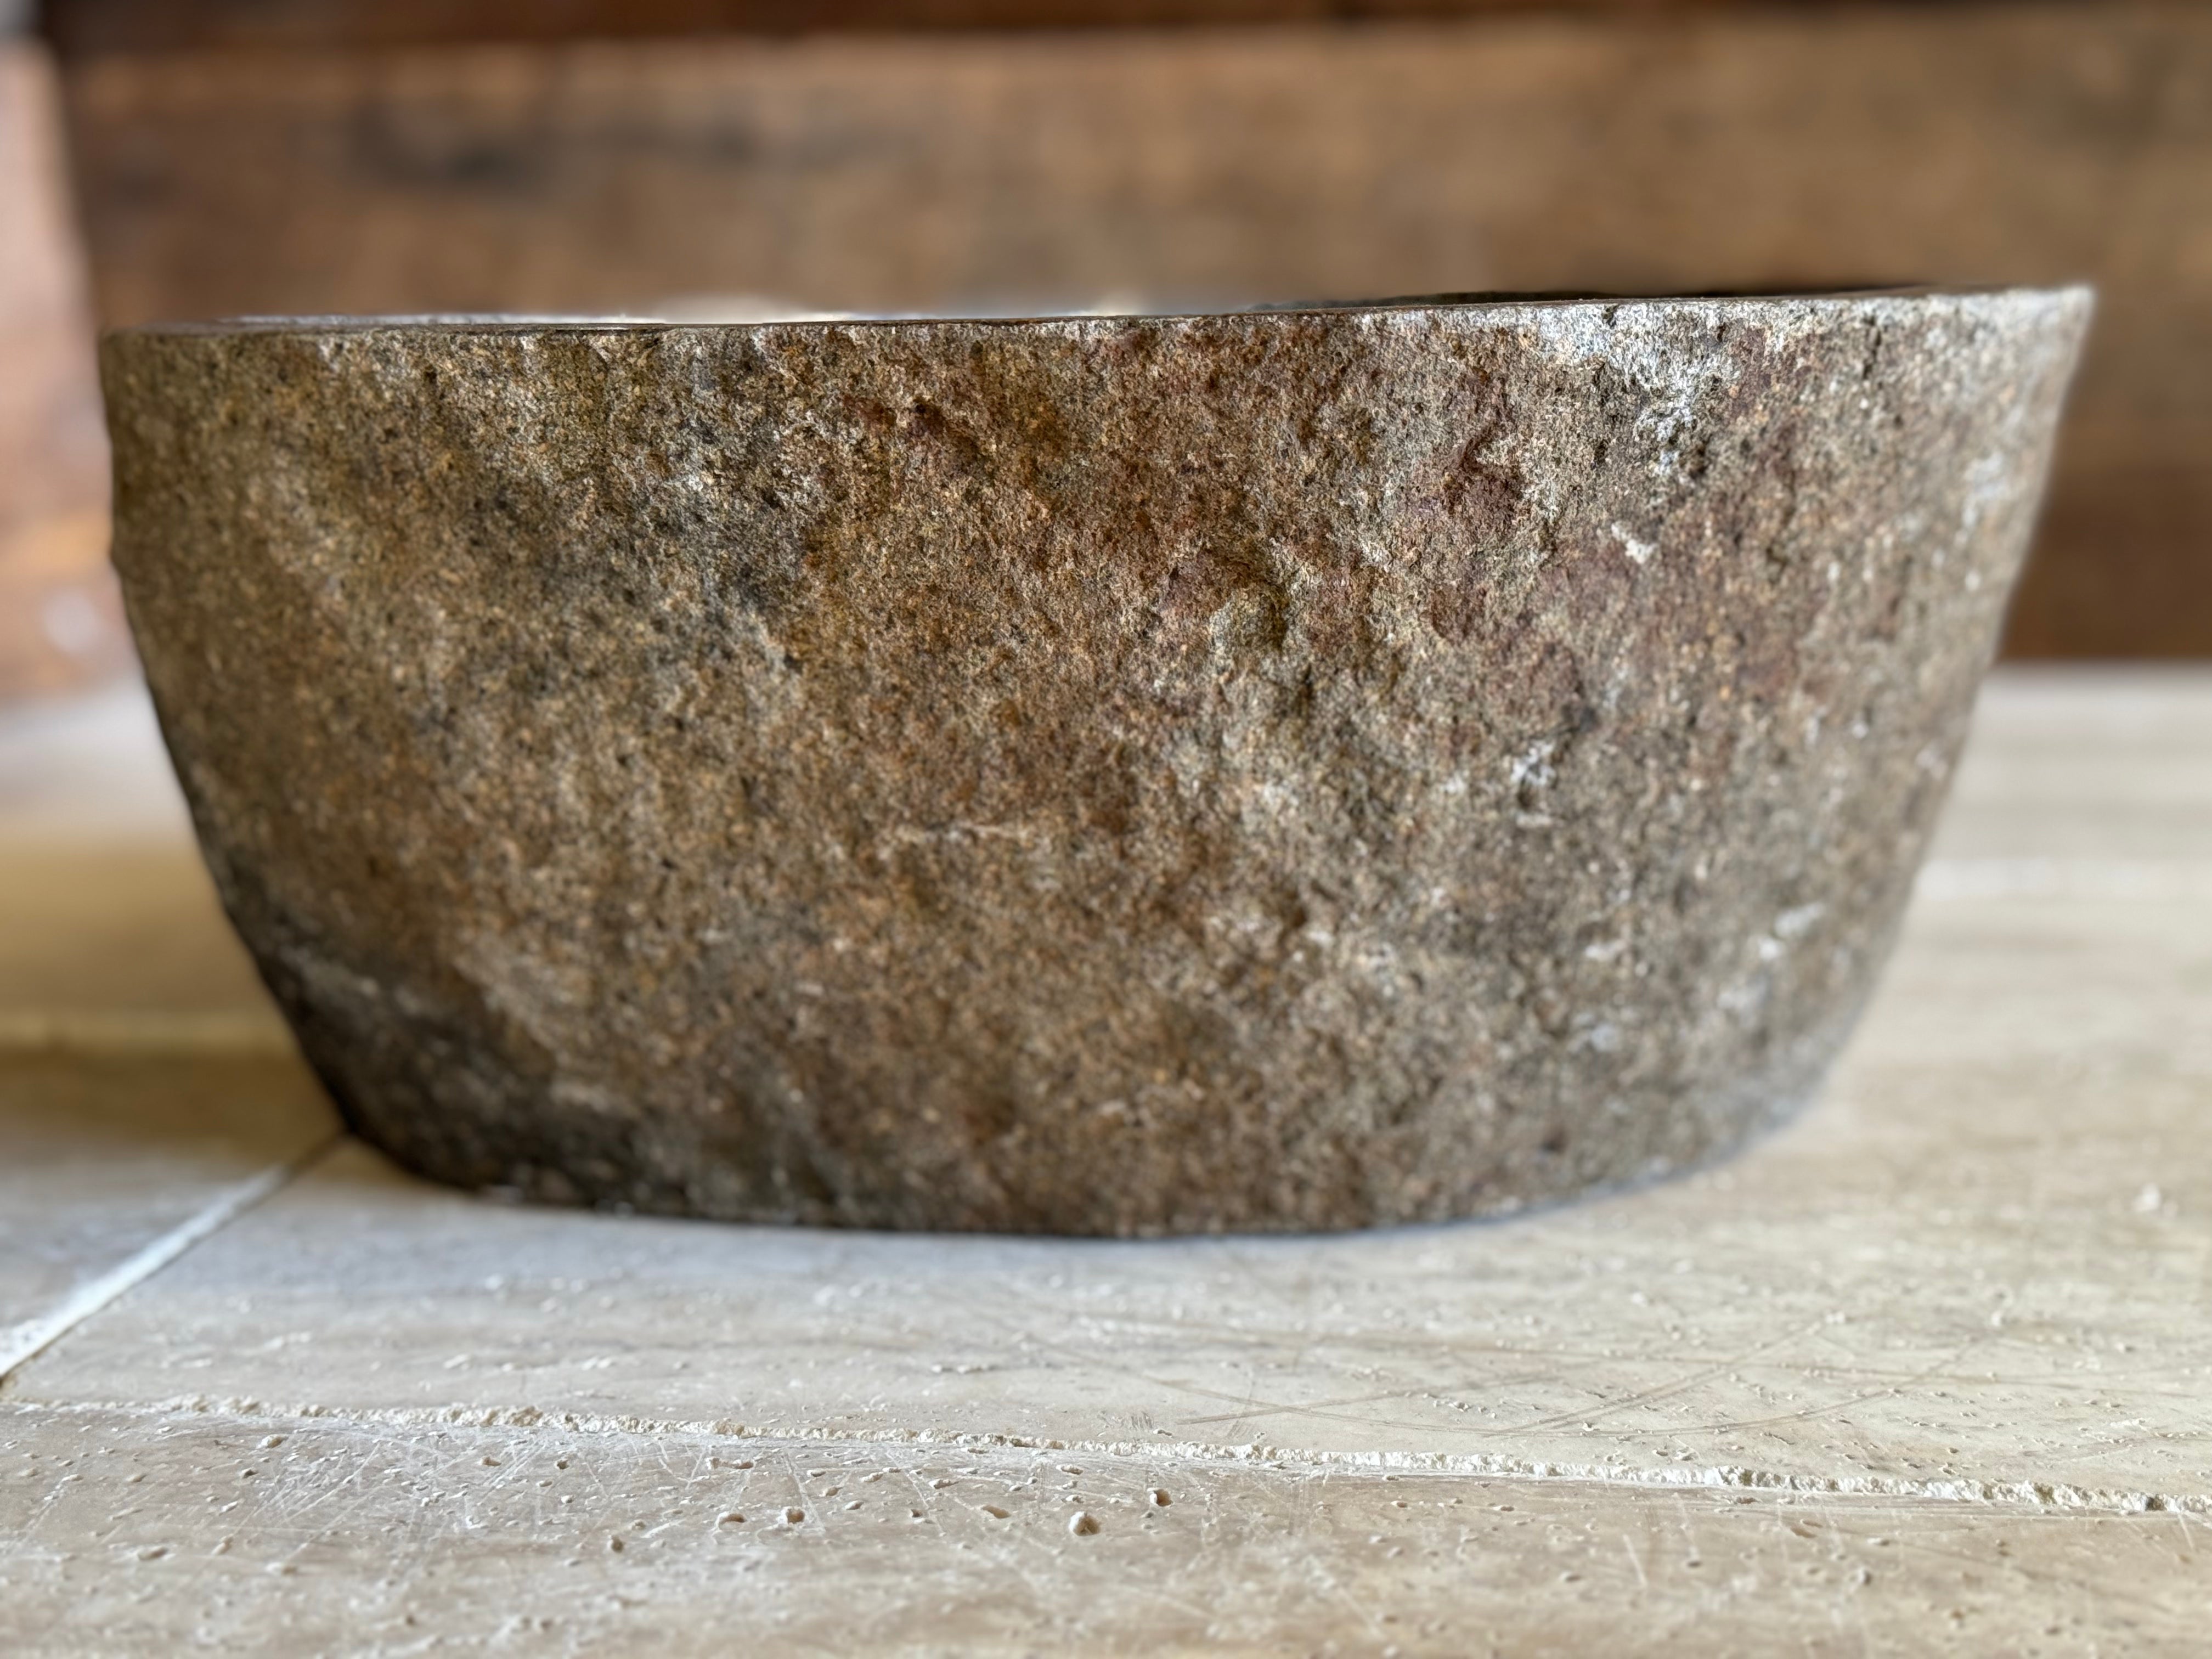 Handmade Natural Oval River Stone Bathroom Basin - RM2306129